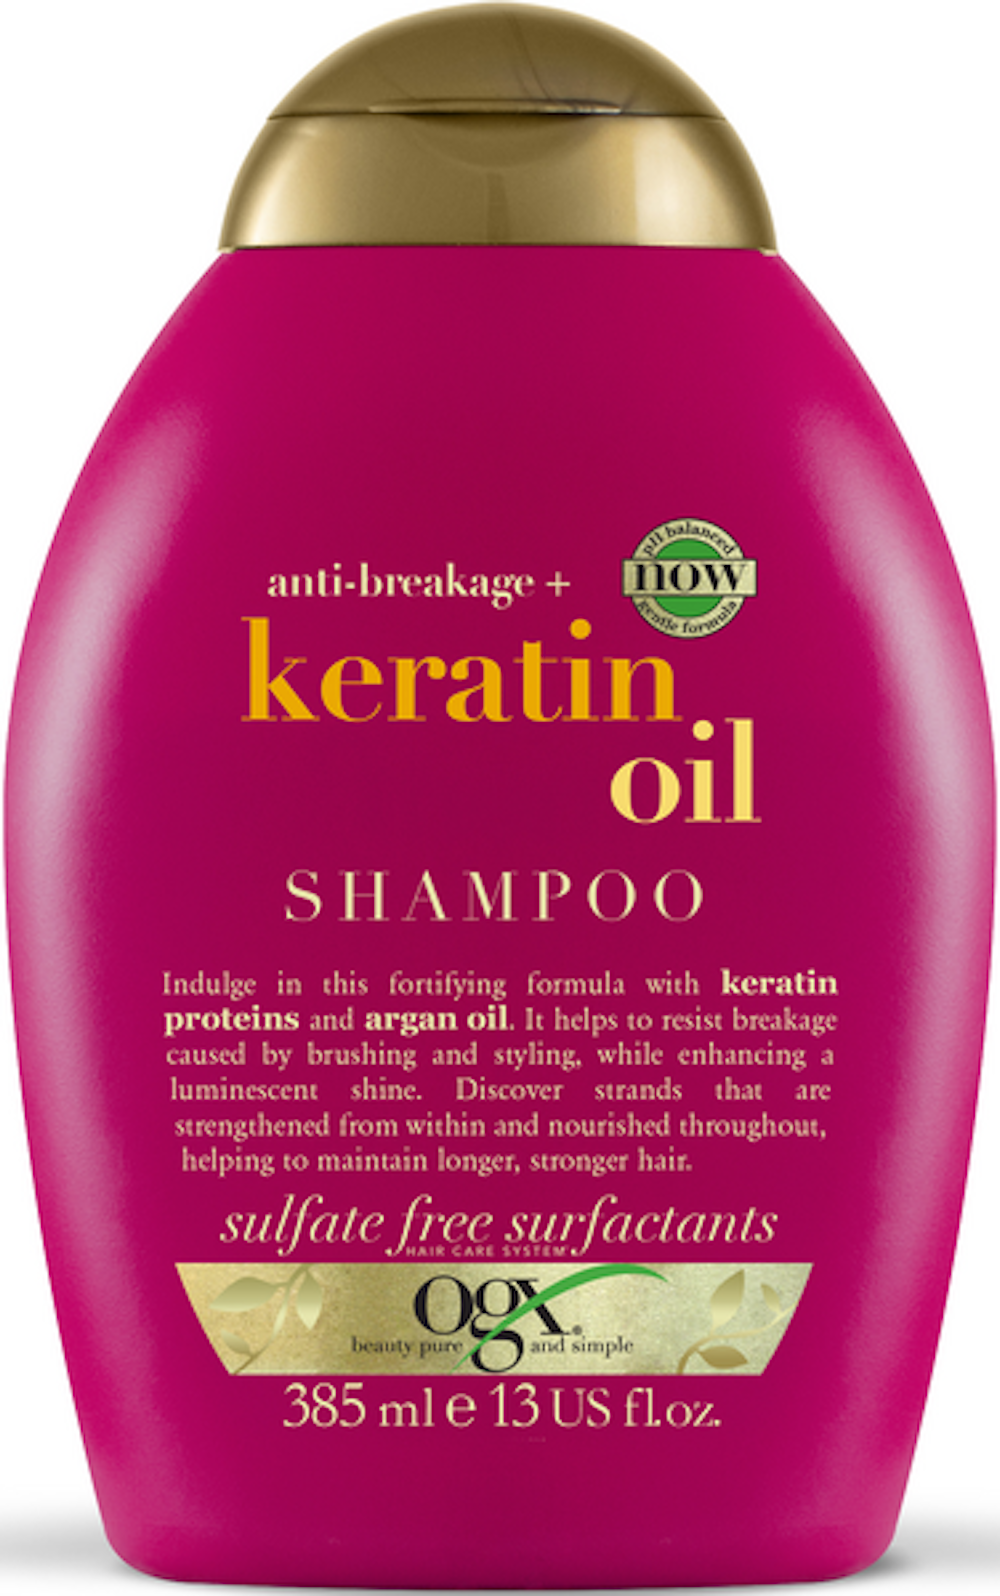 ogx-shampoo-385ml-anti-breakage-keratin-horeca-tukku-kespro